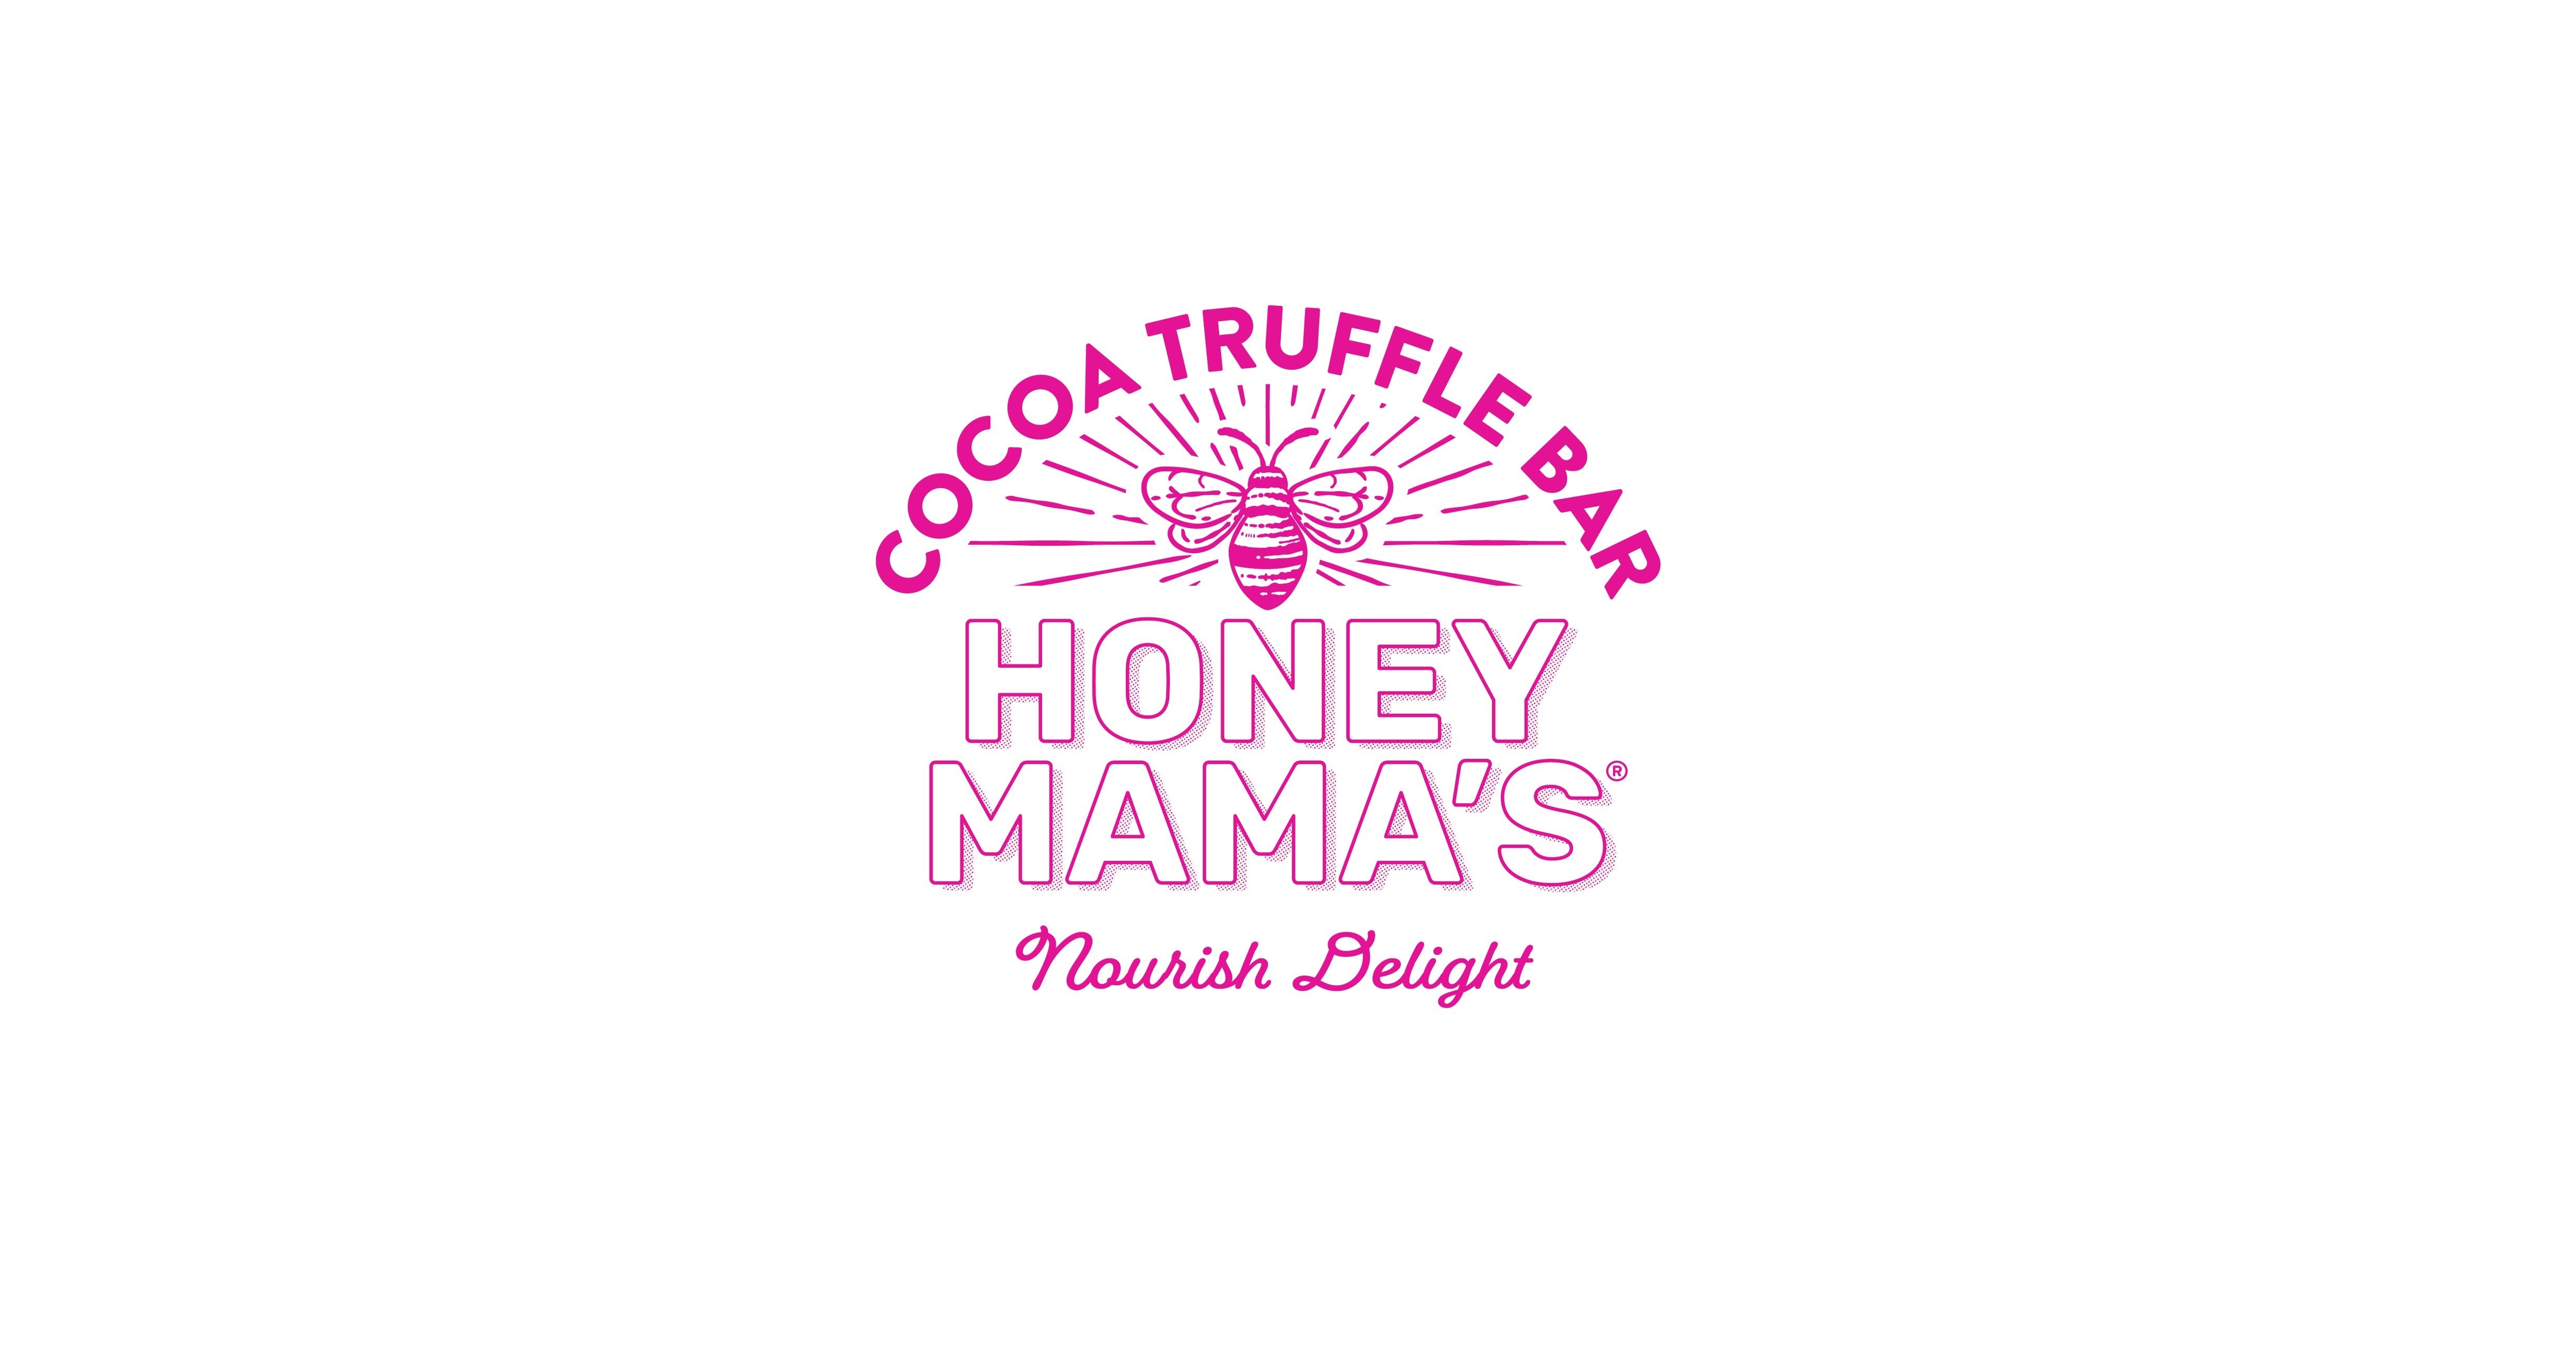 Honey Mama's debuts refrigerated Carrot Cake Truffle Bar